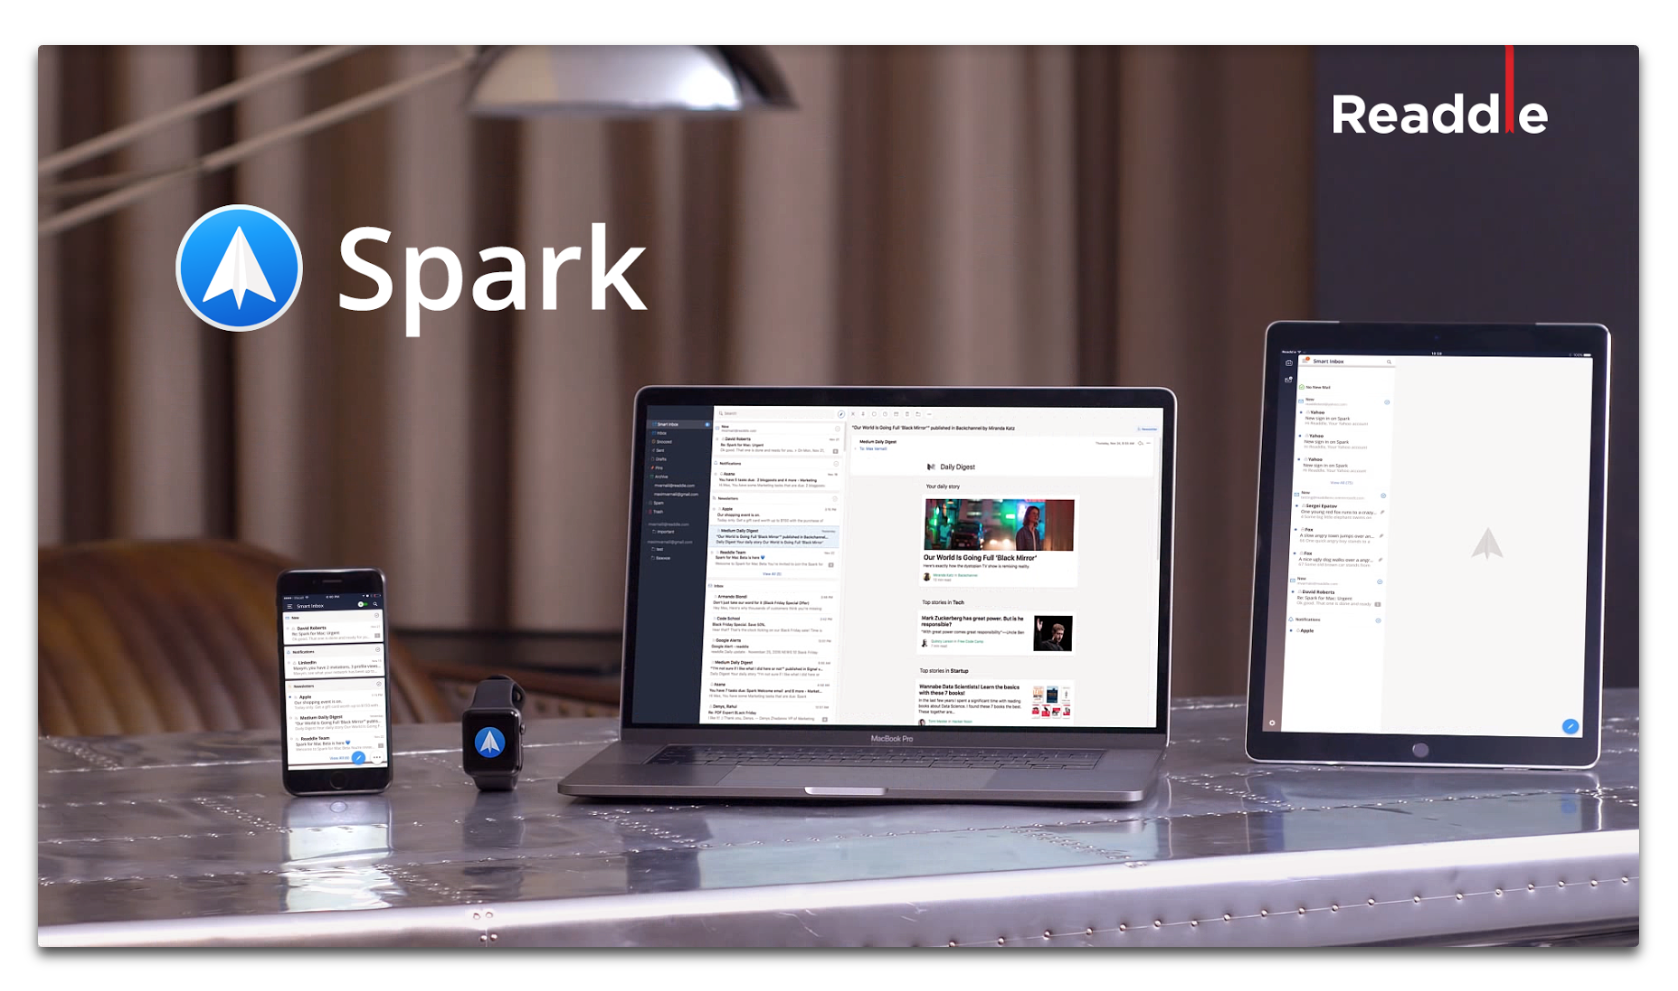 【Mac / iOS】Readdle、予約送信およびリマインダーのオプションなどを追加した「Spark by Readdle 2.0.5」をリリース